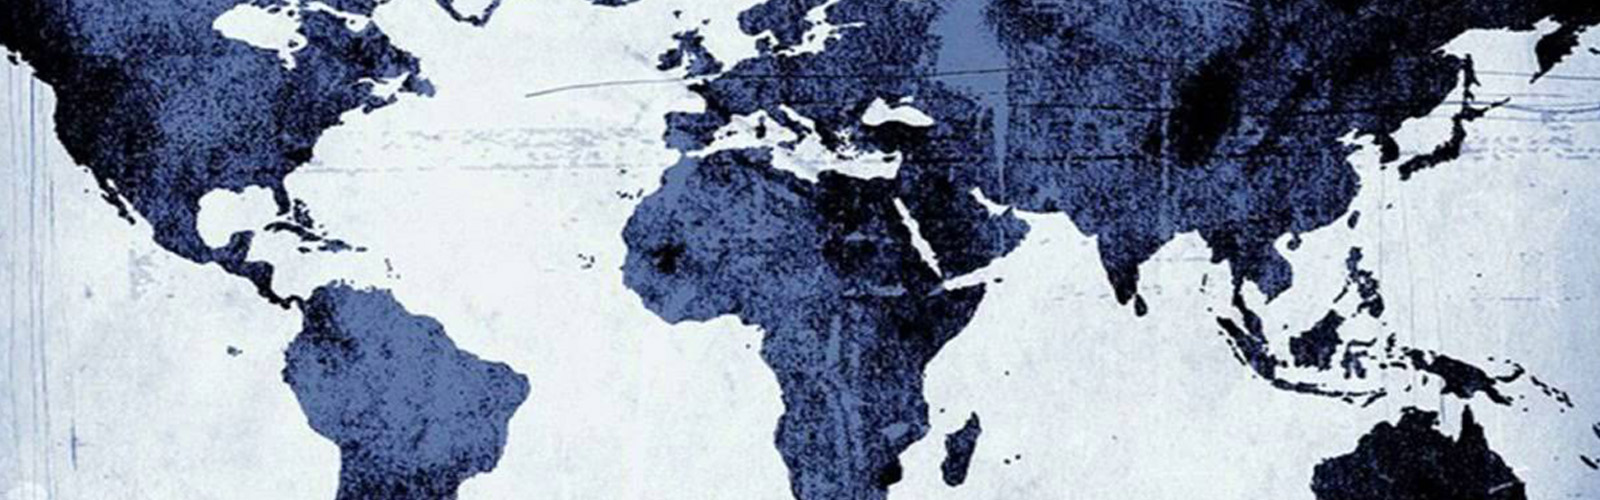 stylized world map in blue